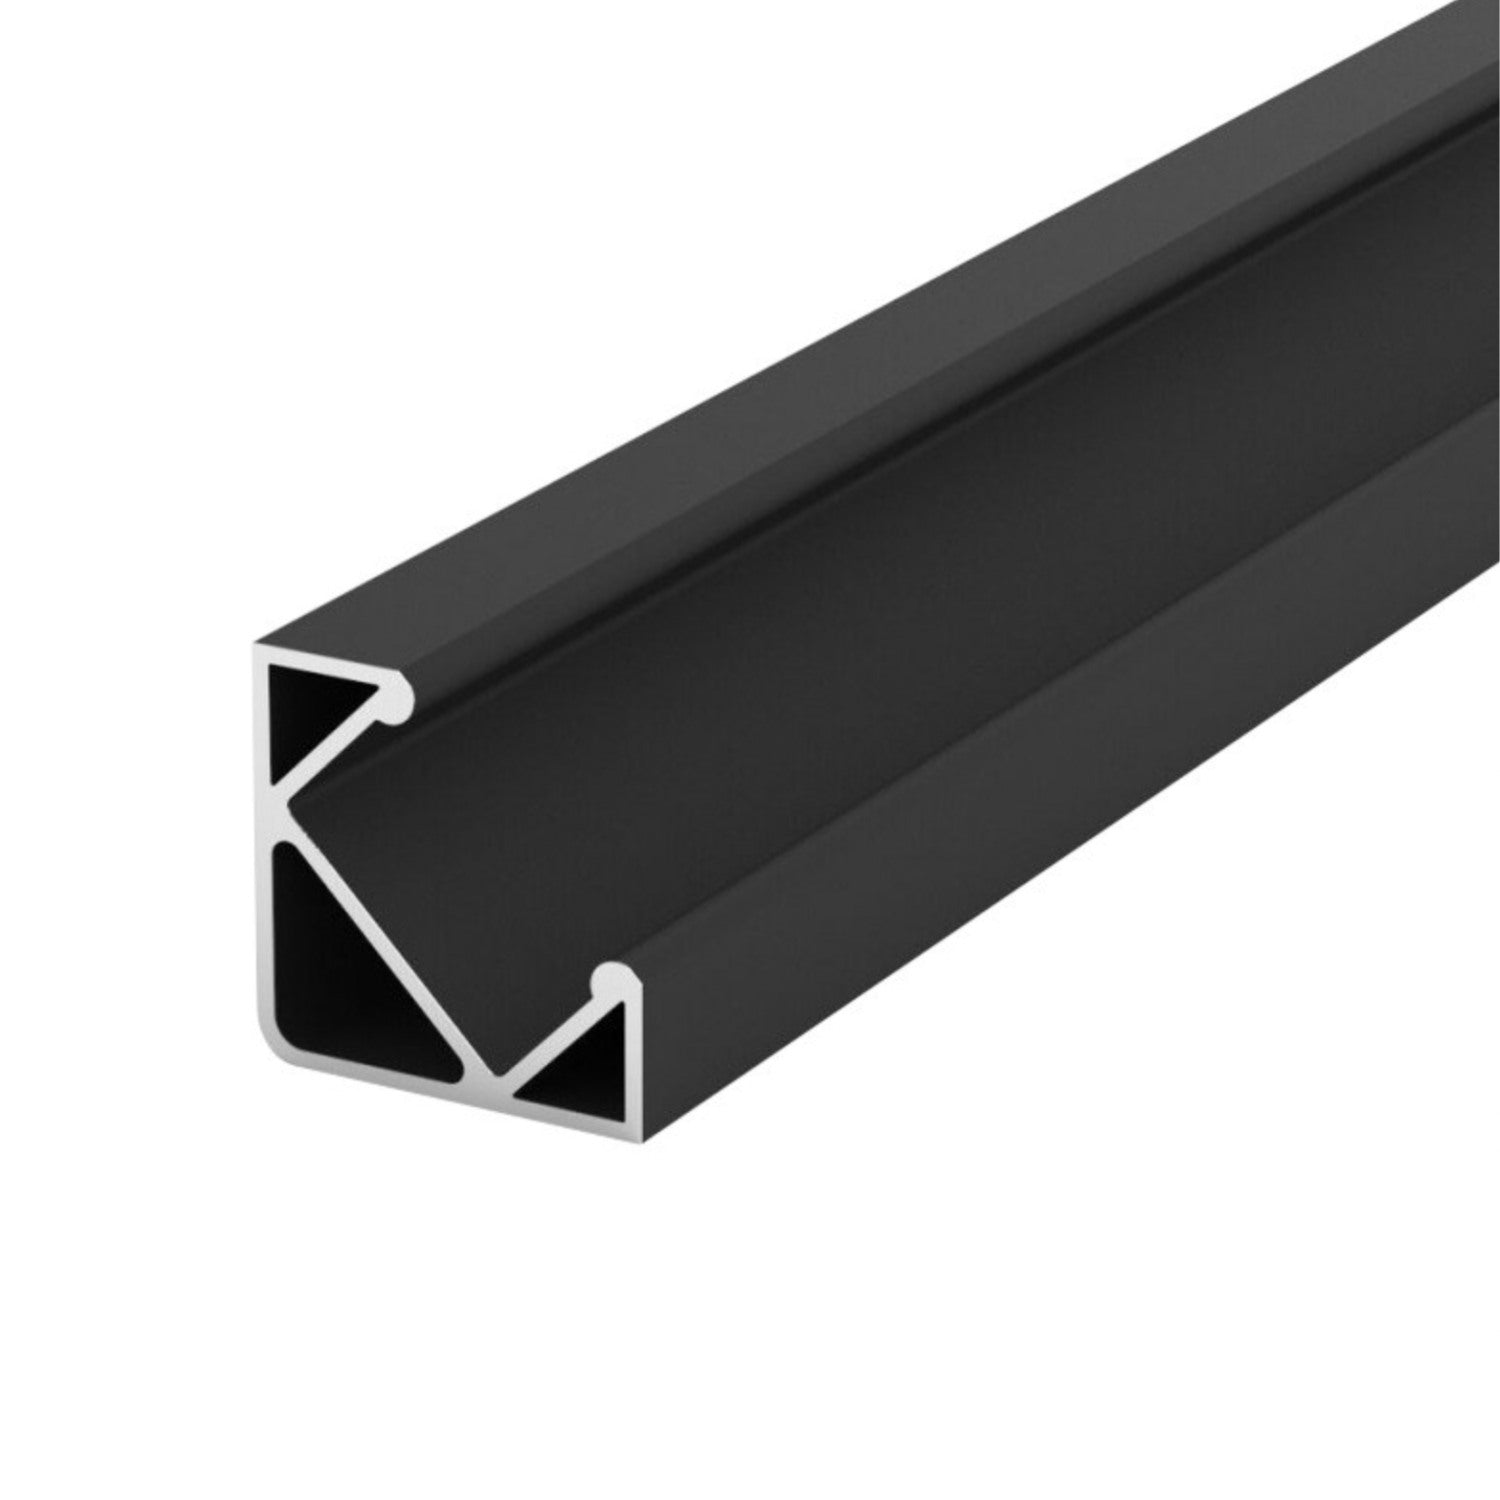 LED Strip Aluminium Corner Profile Black Milky Cover Channel 19x19mm - ATOM LED